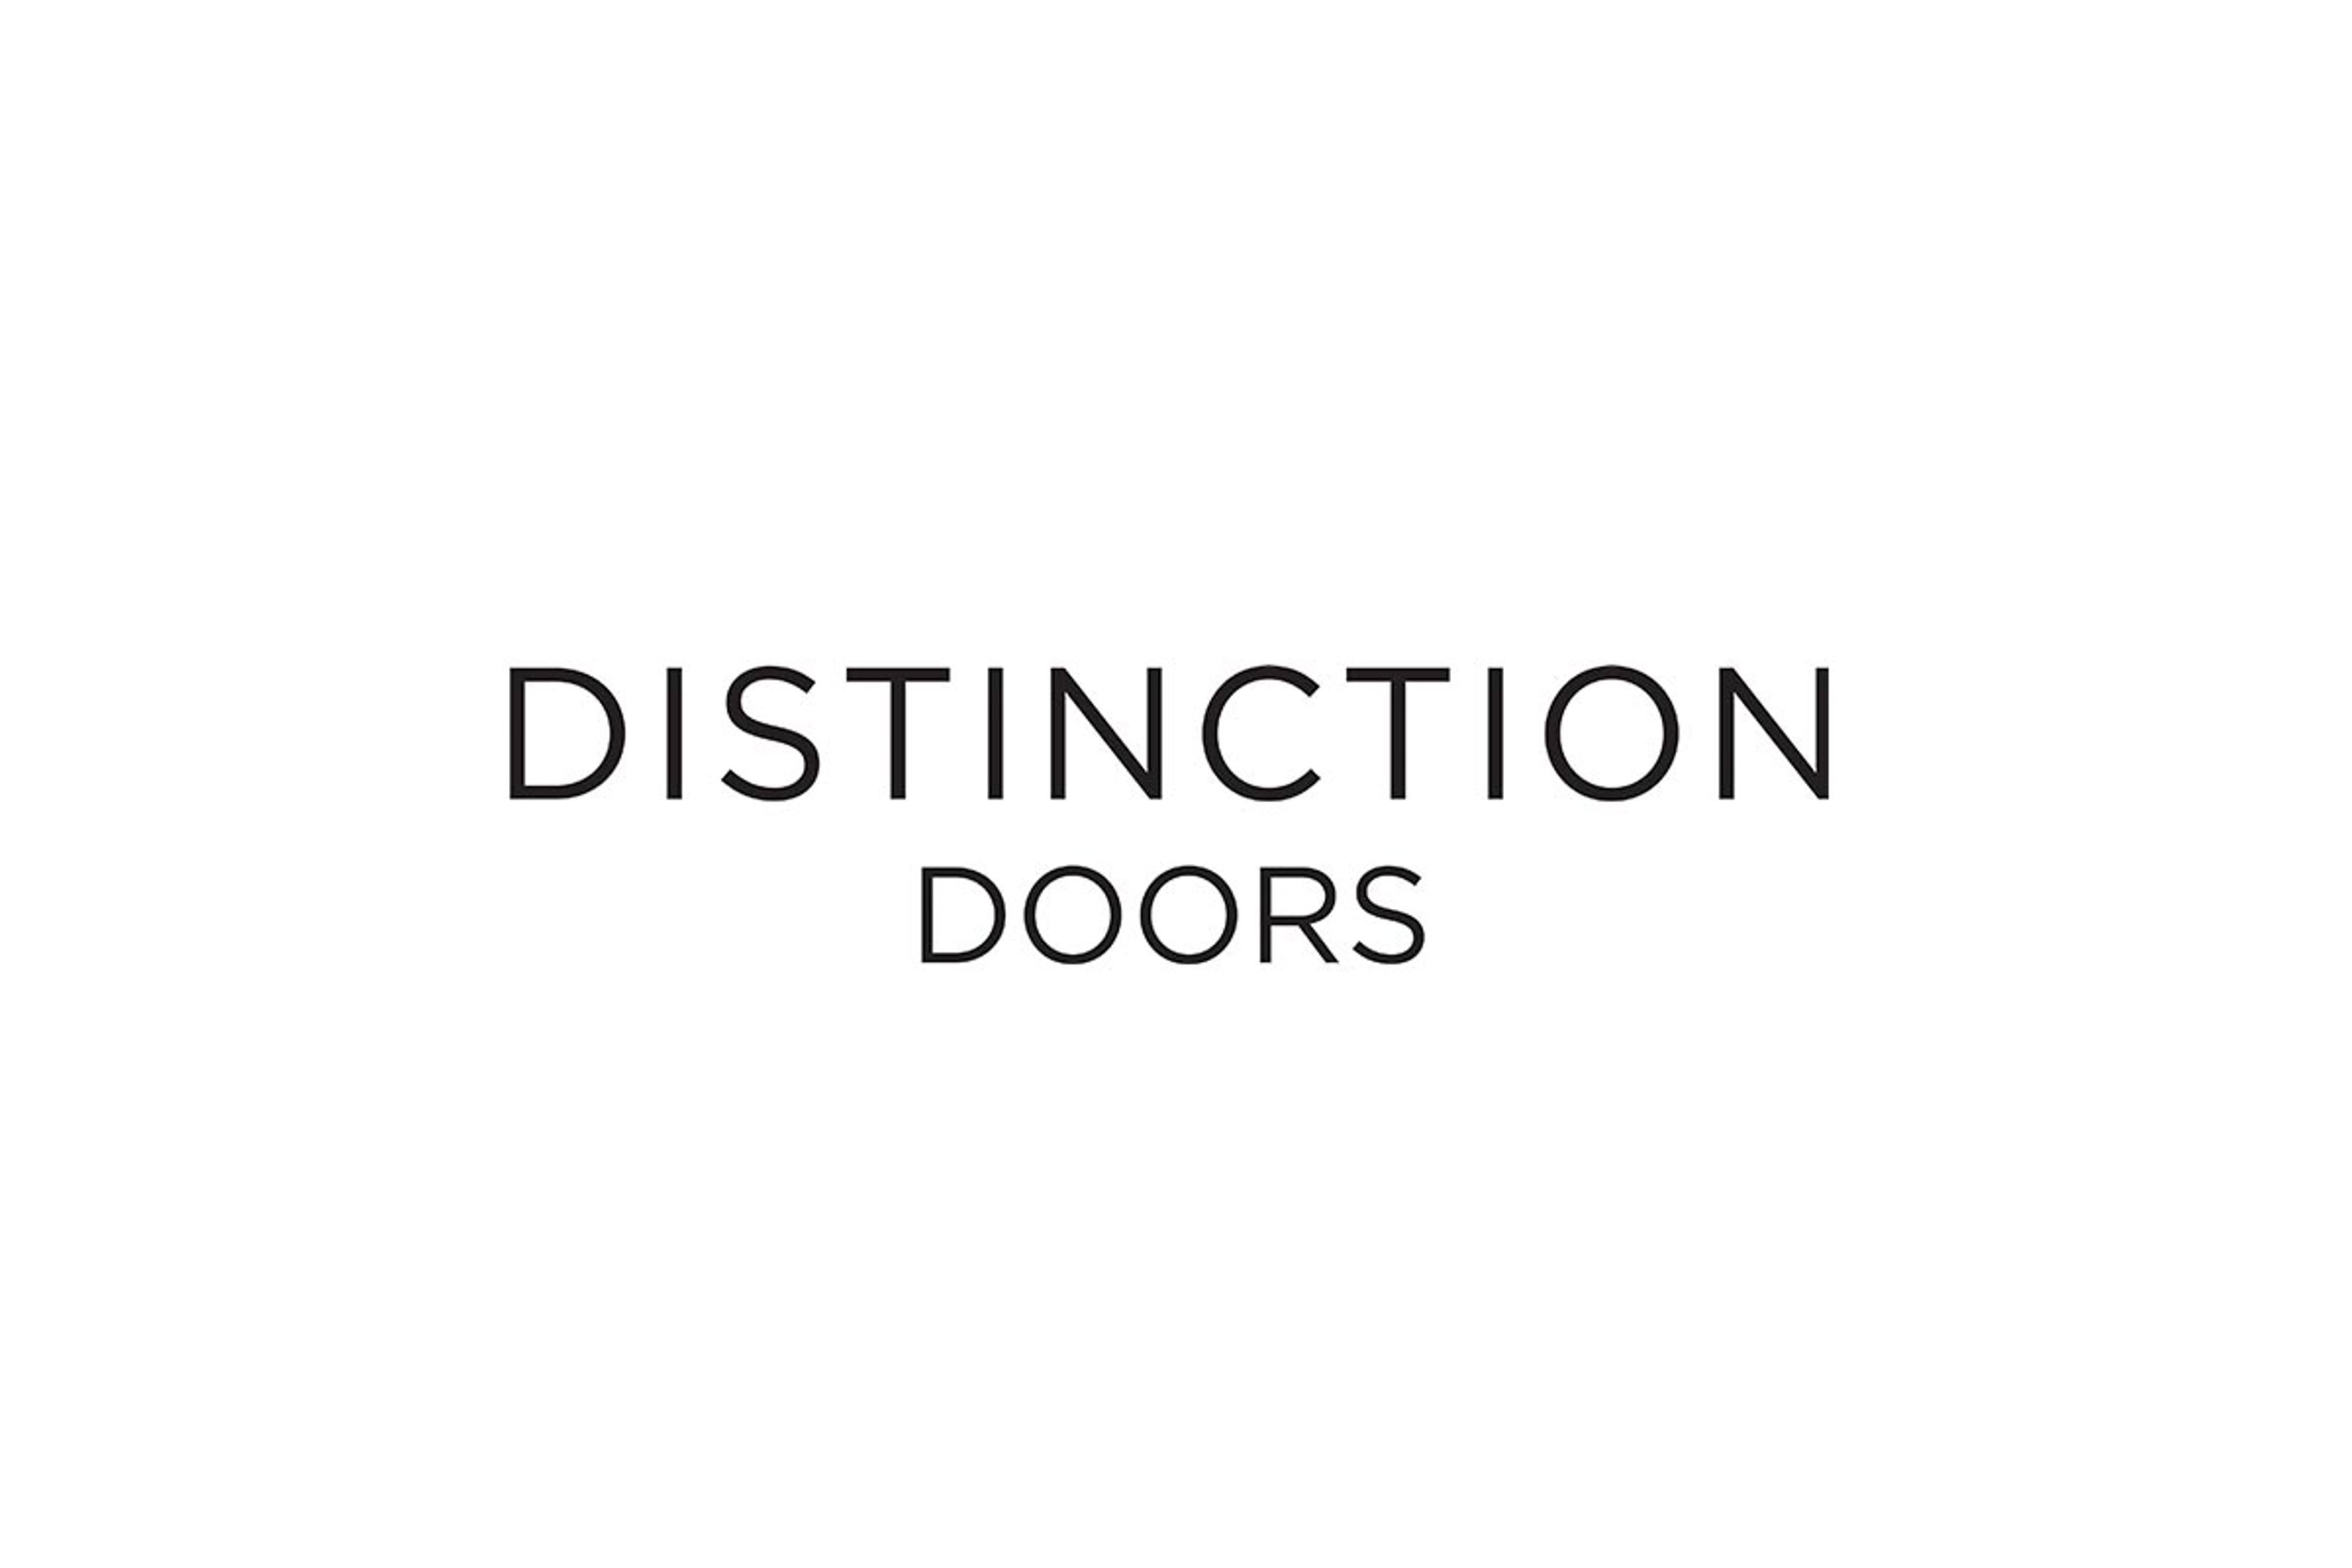 Distinction Doors Logo